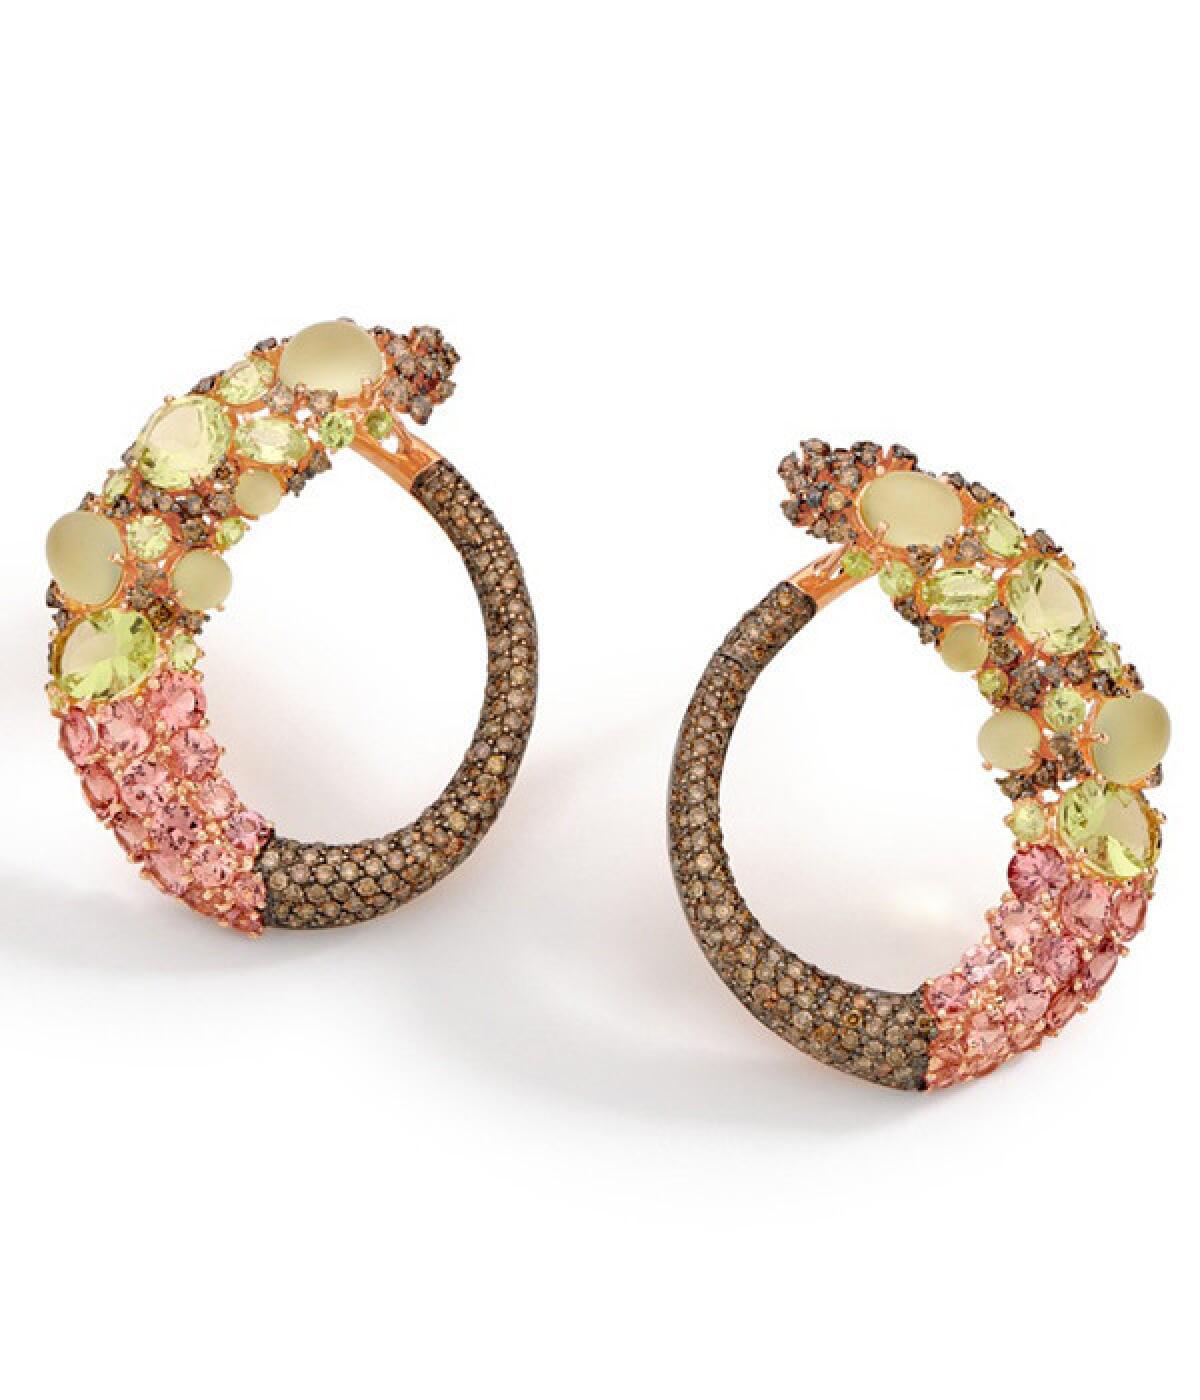 Brumani 18-karat rose gold earrings with brown diamonds, chrysoberyl, lemon quartz, and mandarin garnet, $19,585 at Nasrin Imani, Beverly Hills, (310) 275-7515 or brumani.com